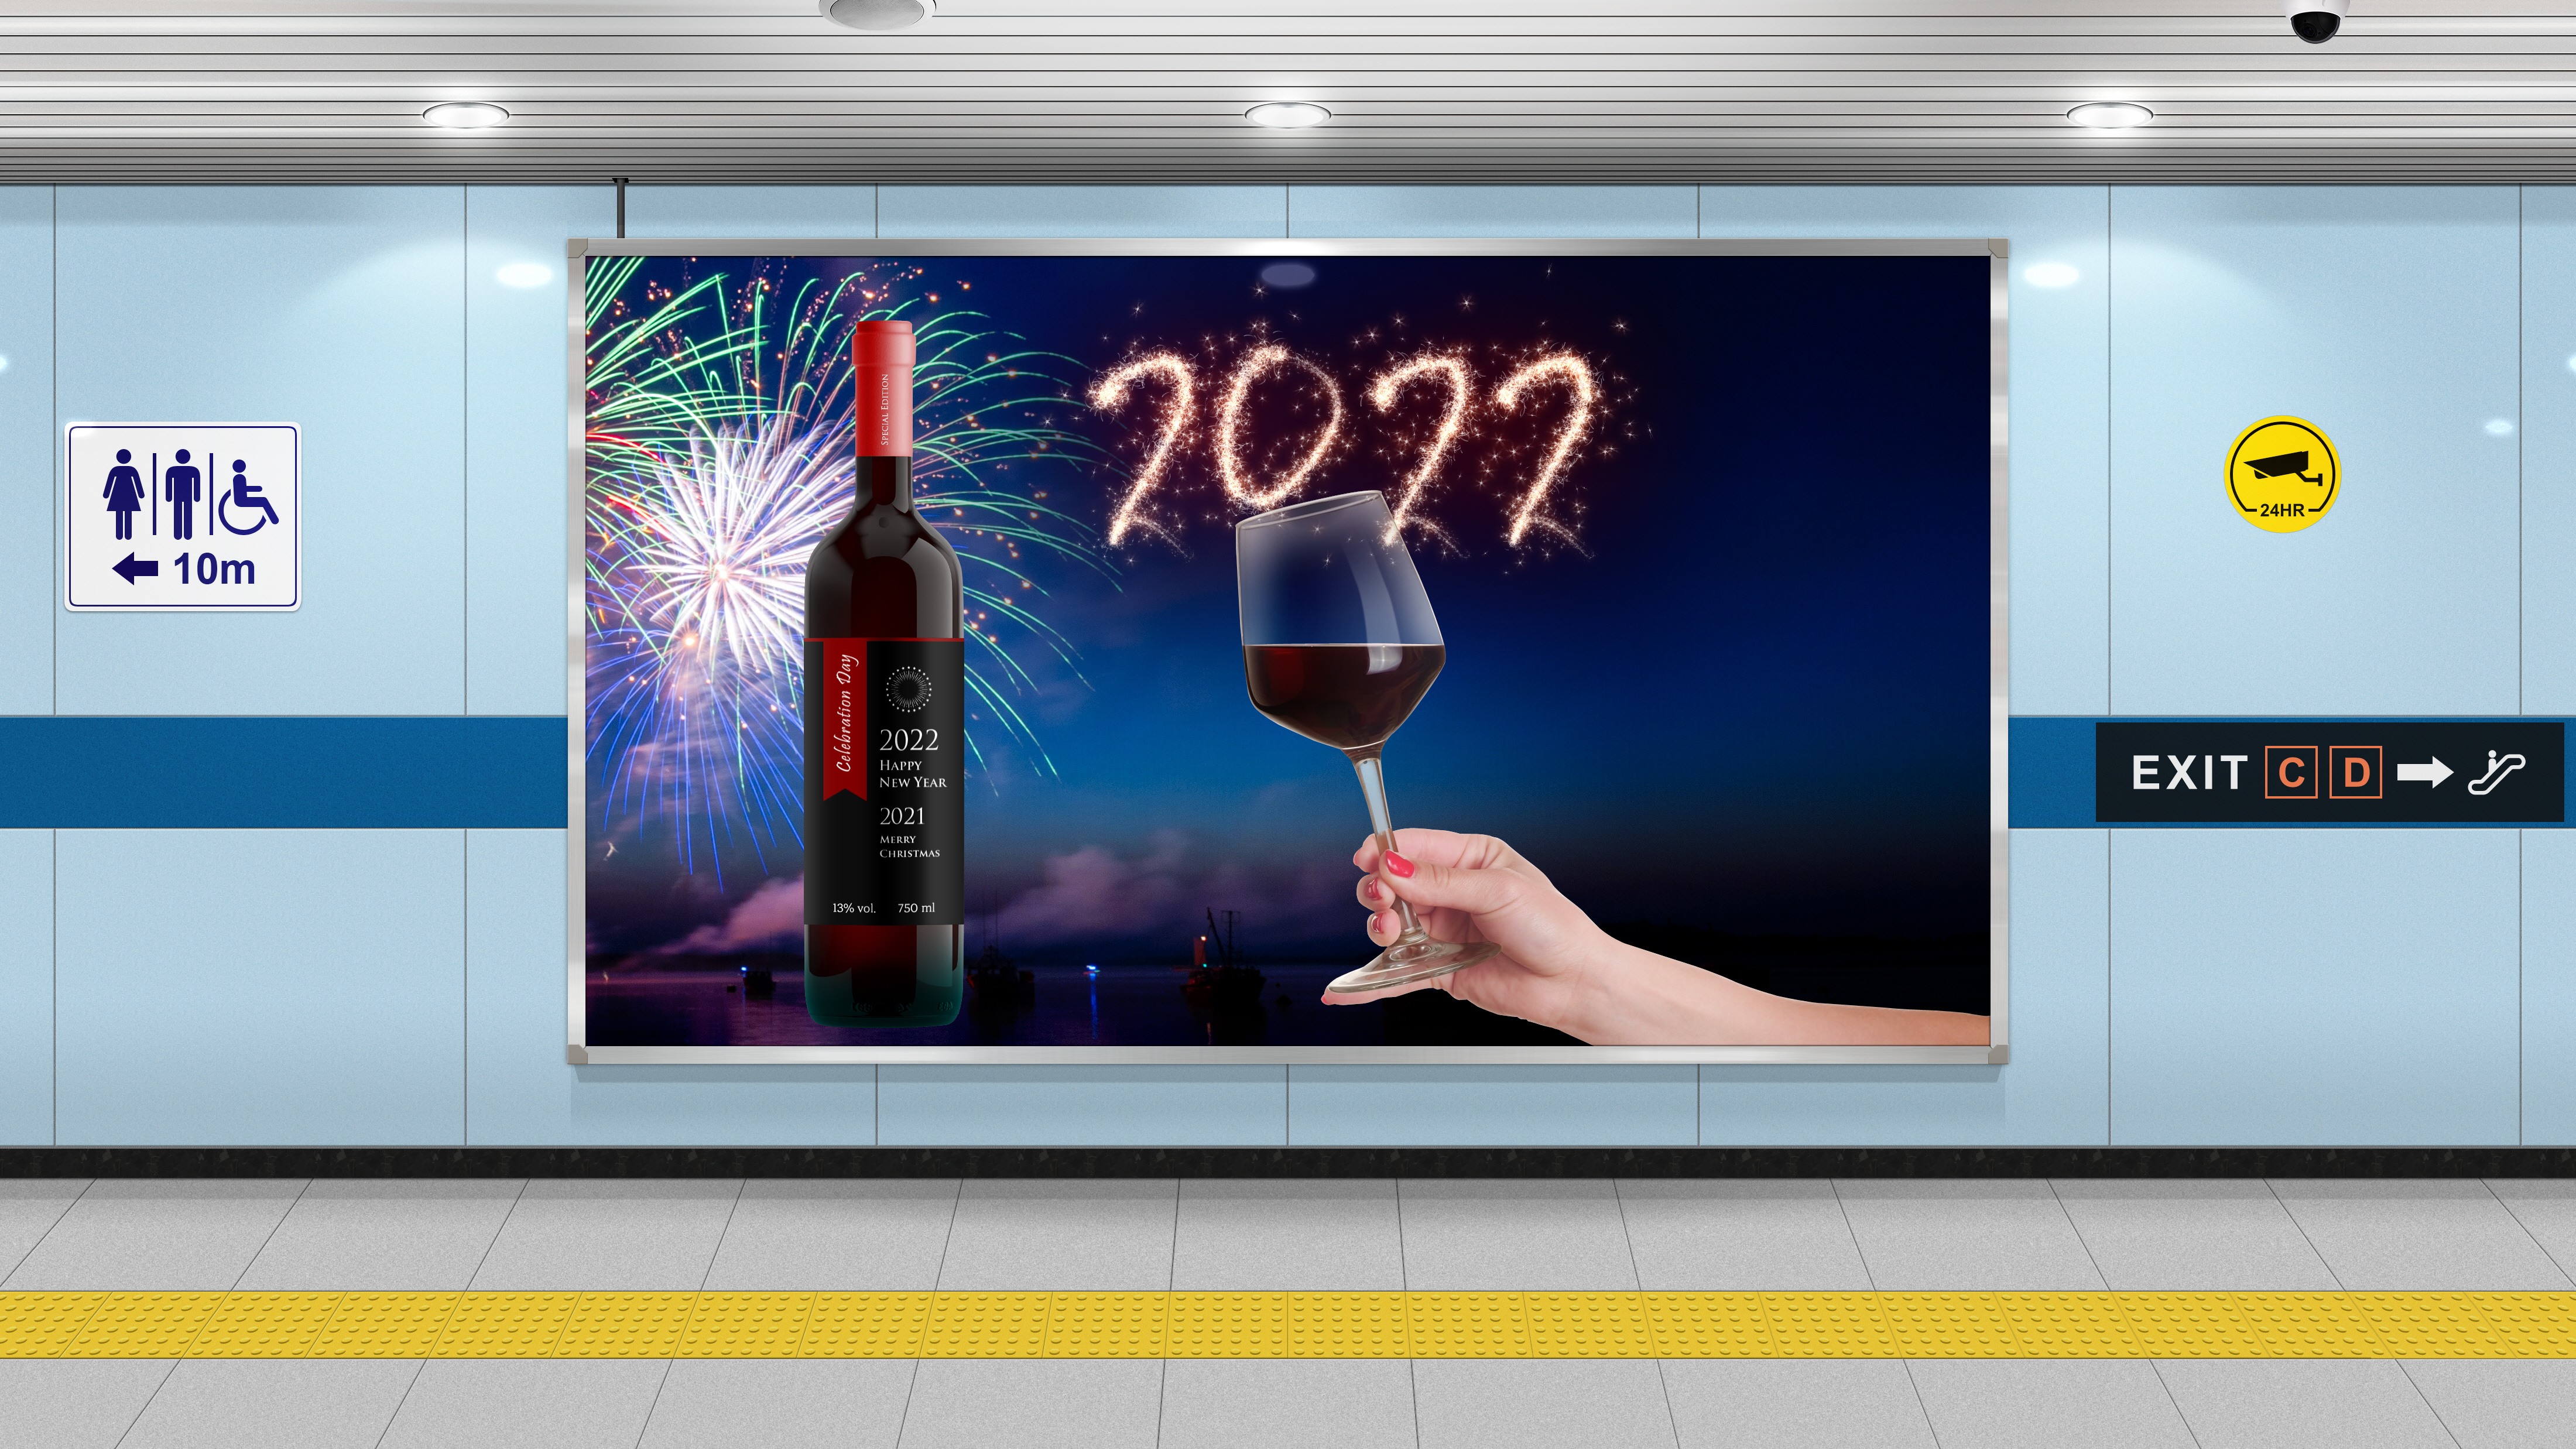 Subway Station Hallway Passage Wine 2022 Year Happy New Year Christmas Fireworks 4400x2475